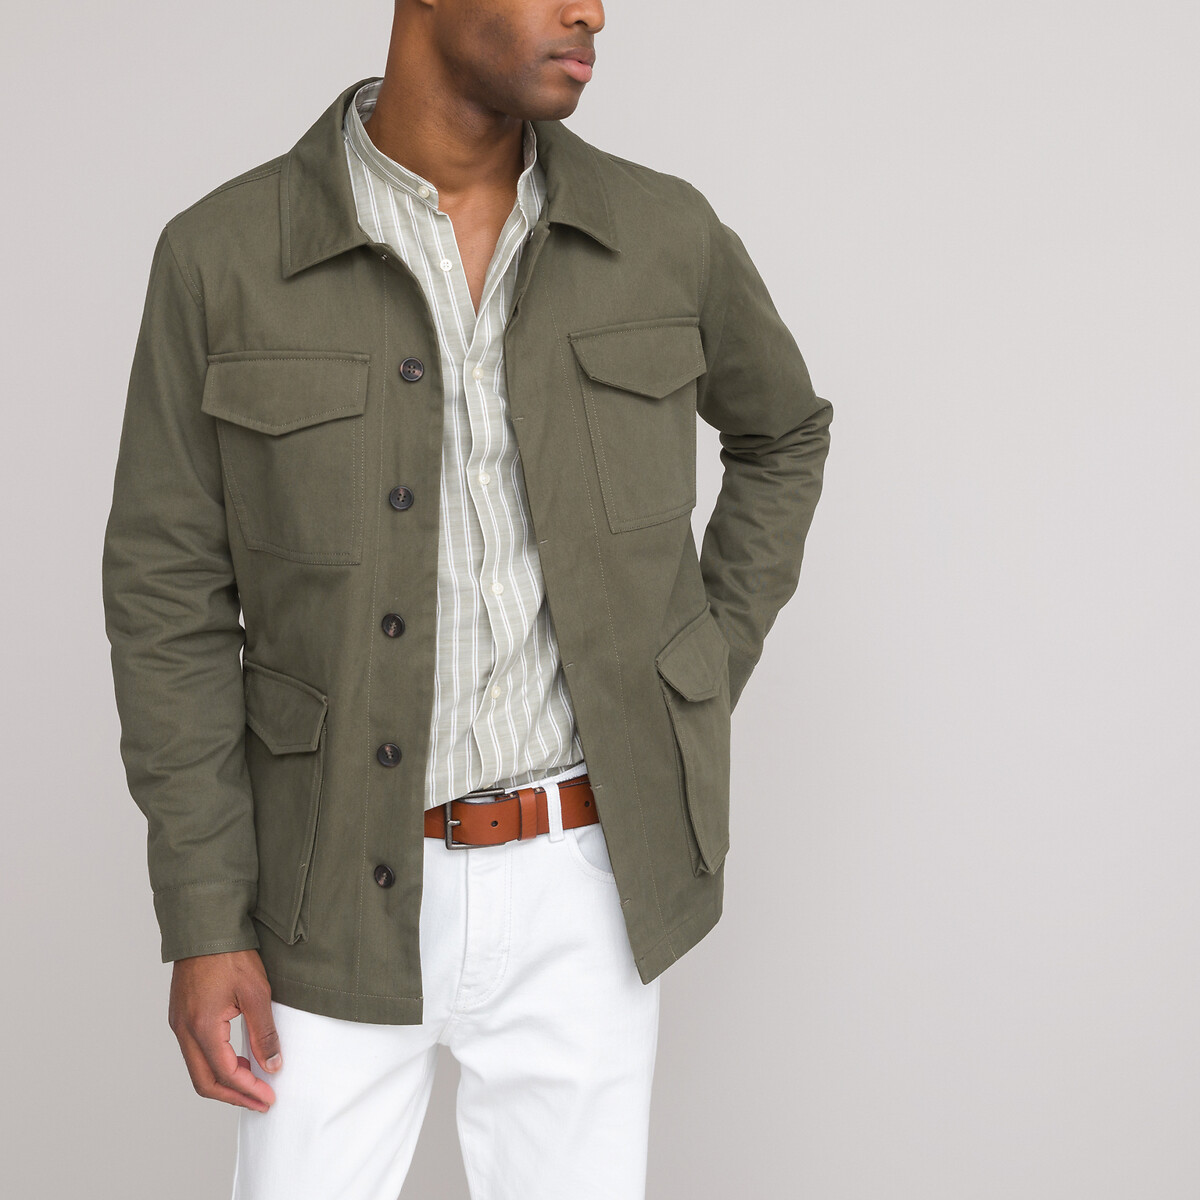 Men's Coats & Jackets | Casual & Smart | La Redoute